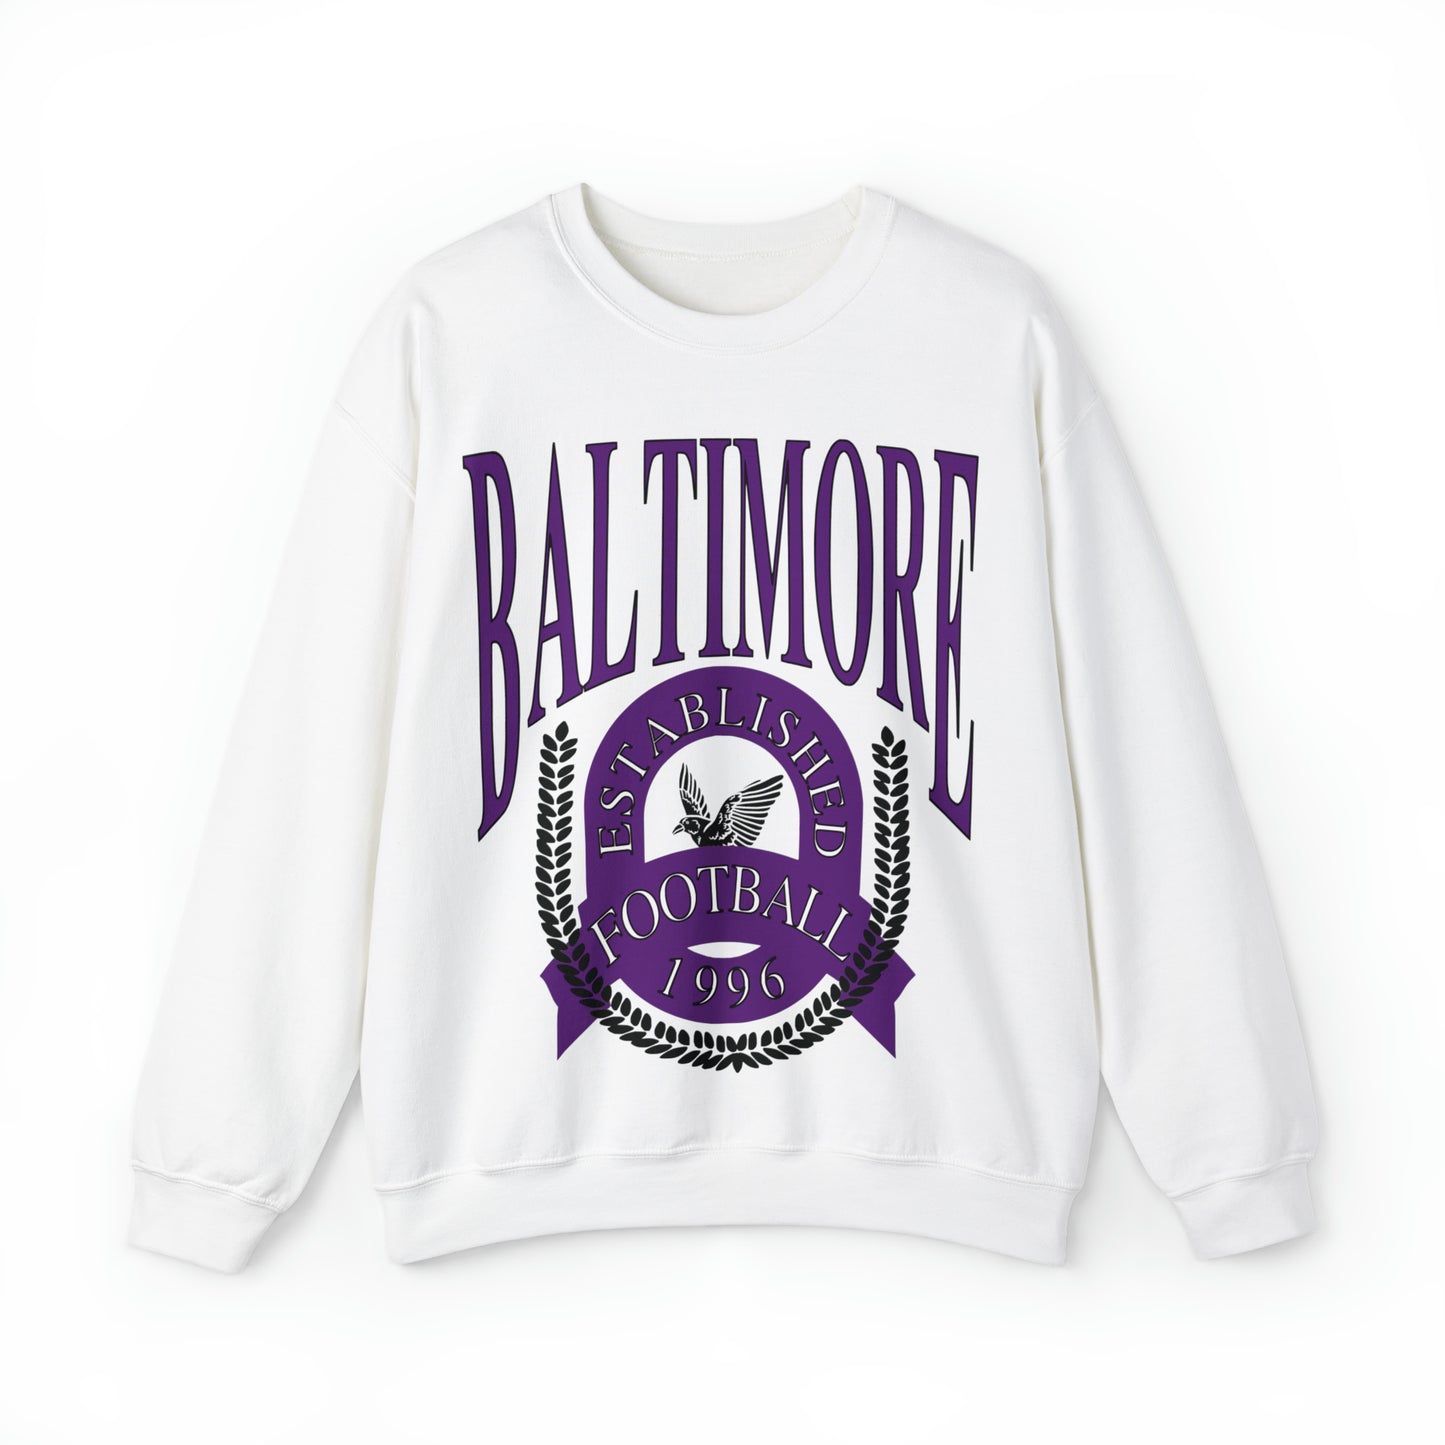 Baltimore Ravens Vintage Crewneck Sweatshirt - Retro NFL Football Hoodie - Men's & Women's Oversized Unisex Sweatshirt - Design 1